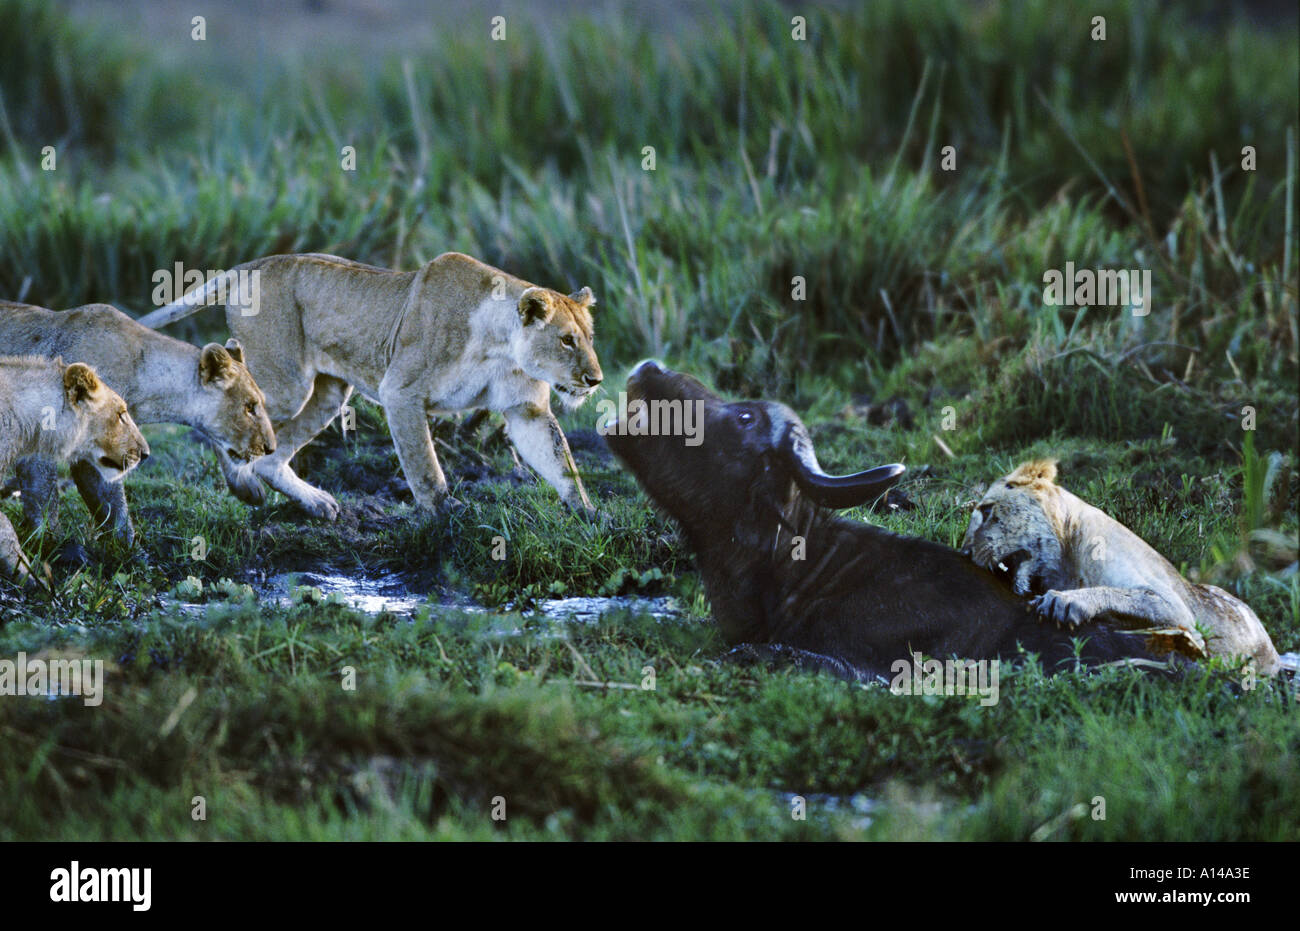 Lions attacking buffalo in the swamp Masai Mara Kenya Stock Photo